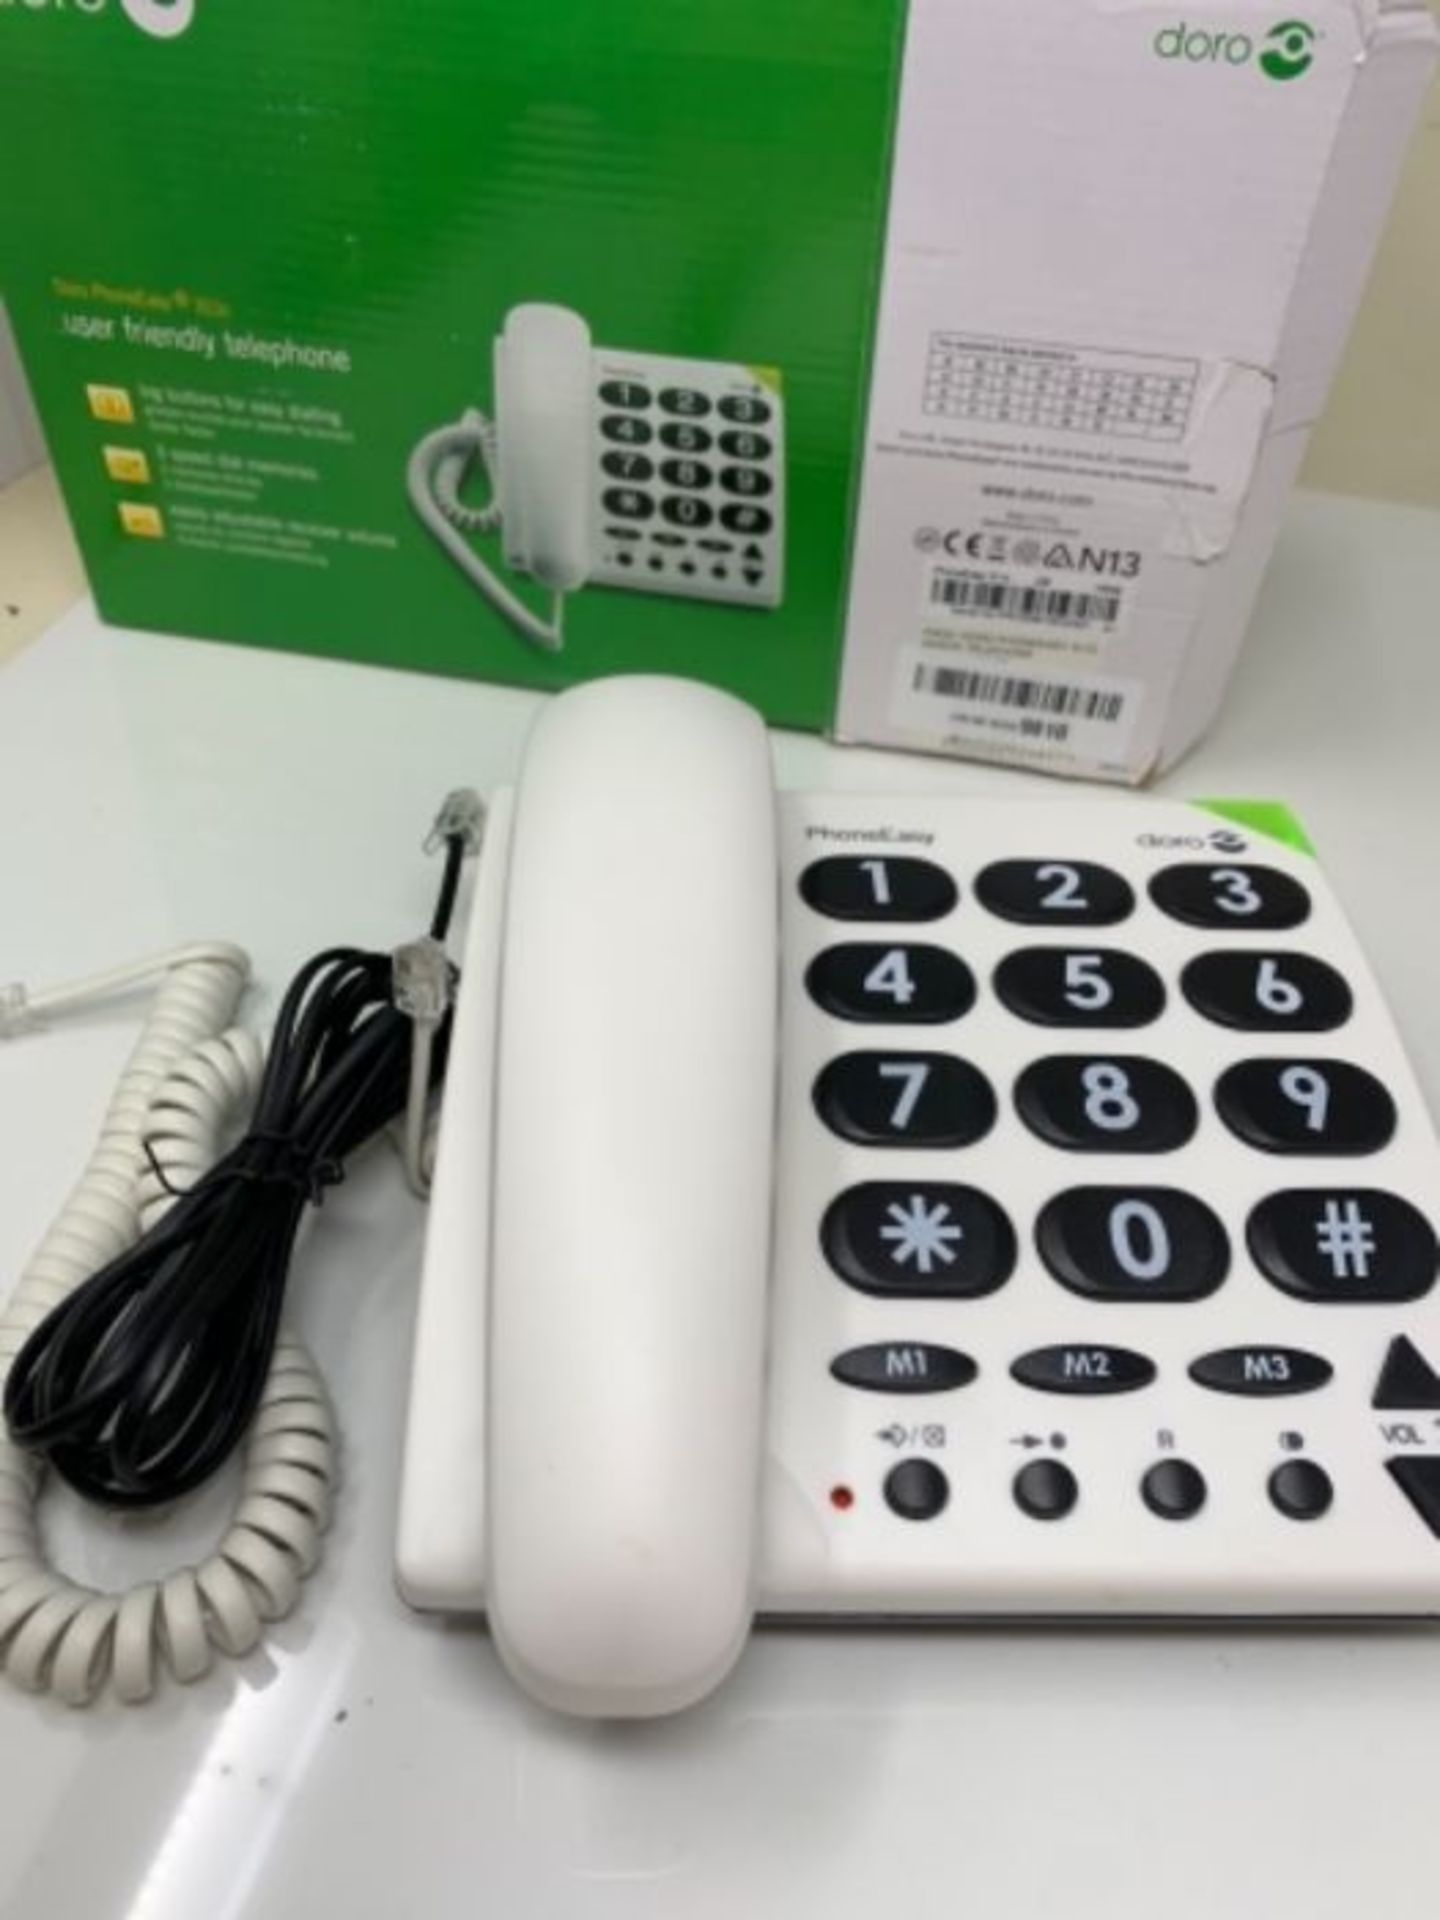 Doro PhoneEasy 311c Big Button Corded Telephone for Seniors (White) - Image 3 of 3